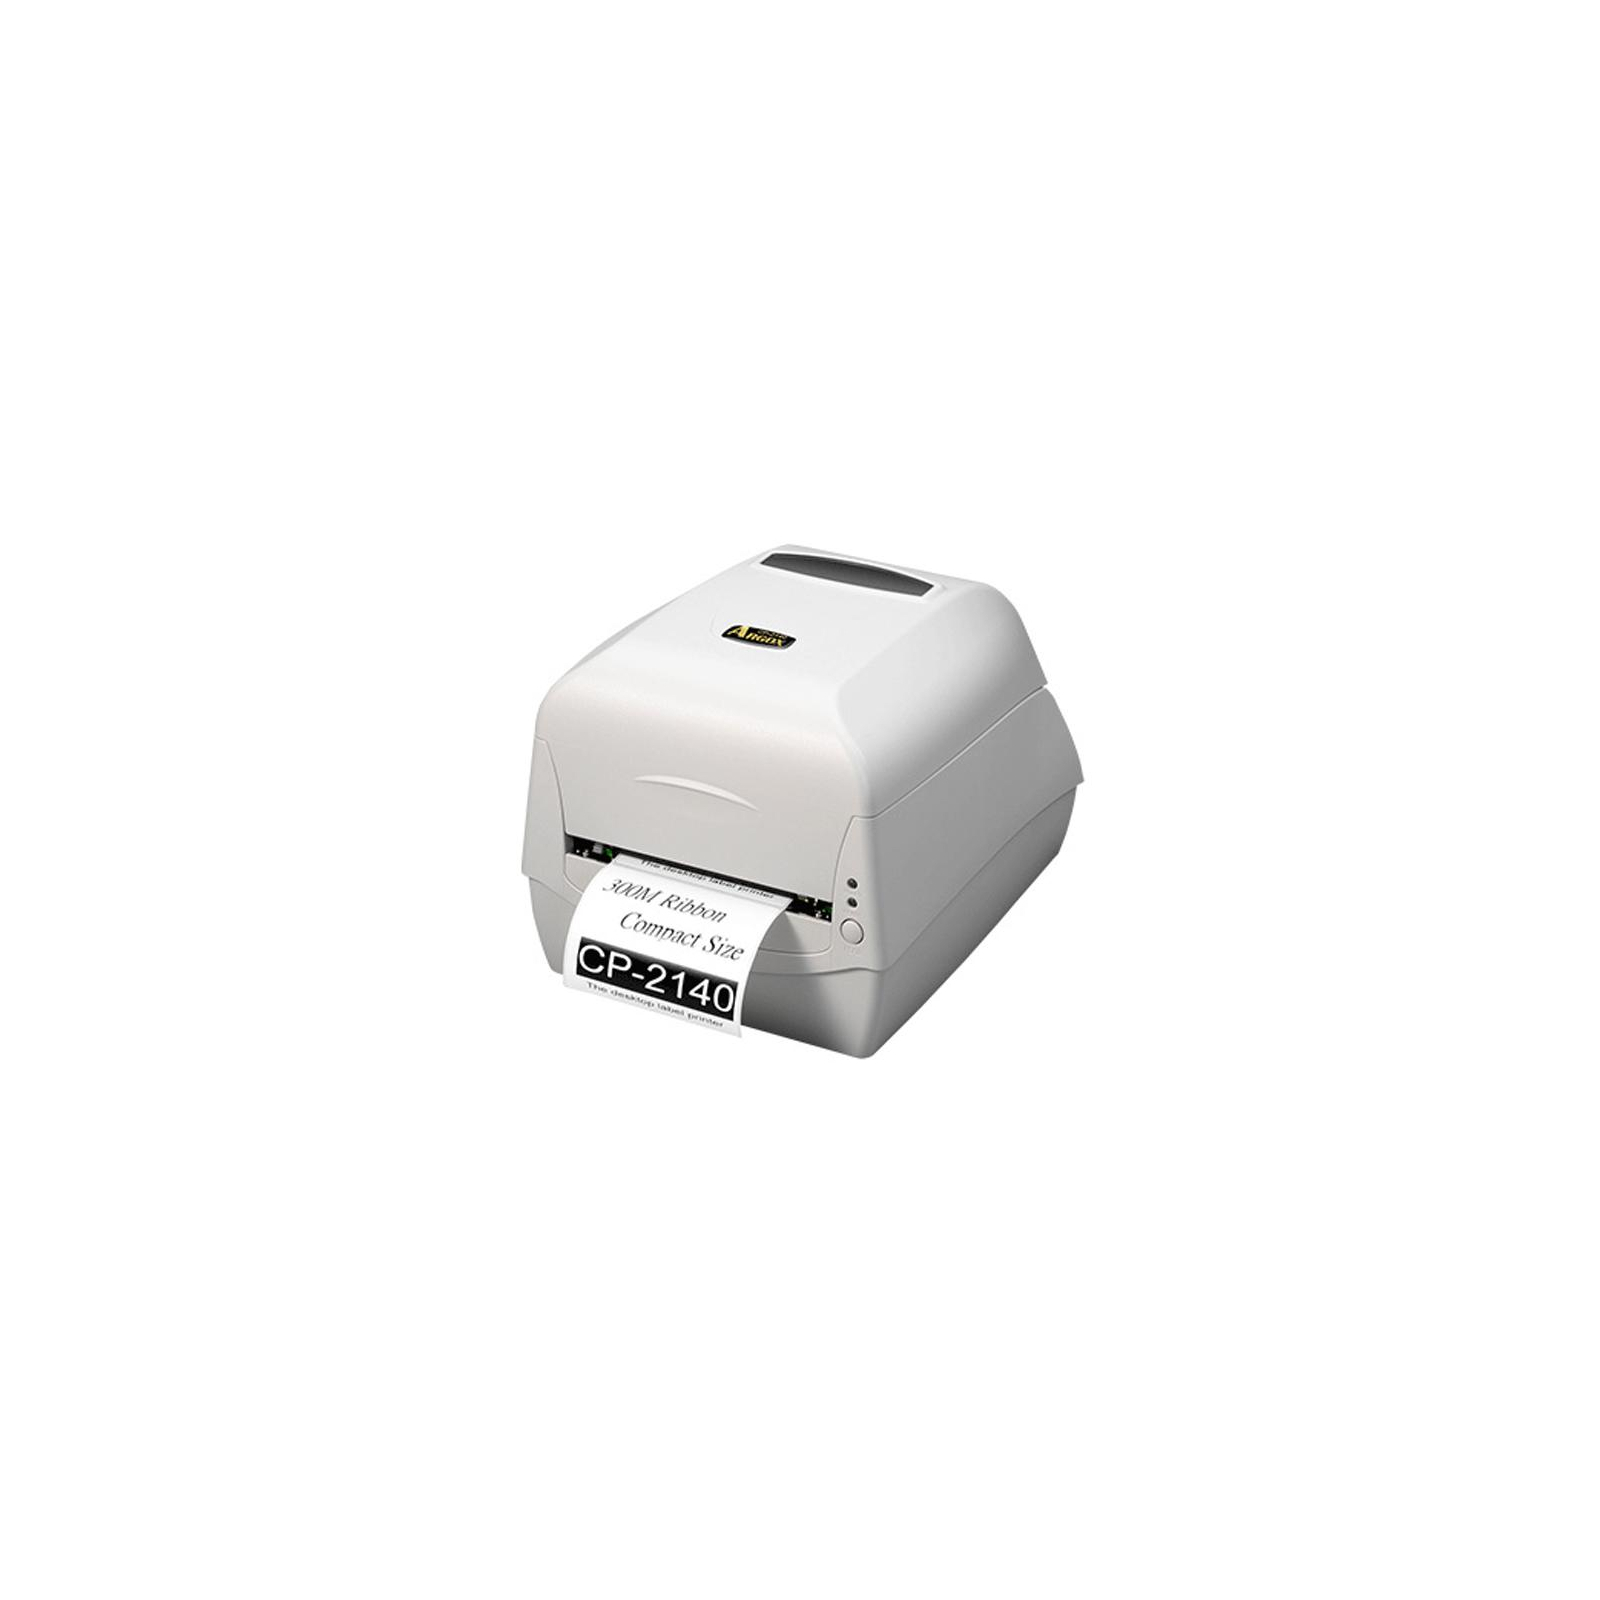 Принтер етикеток Argox CP-2140 DT/TT (99-С2102-000)